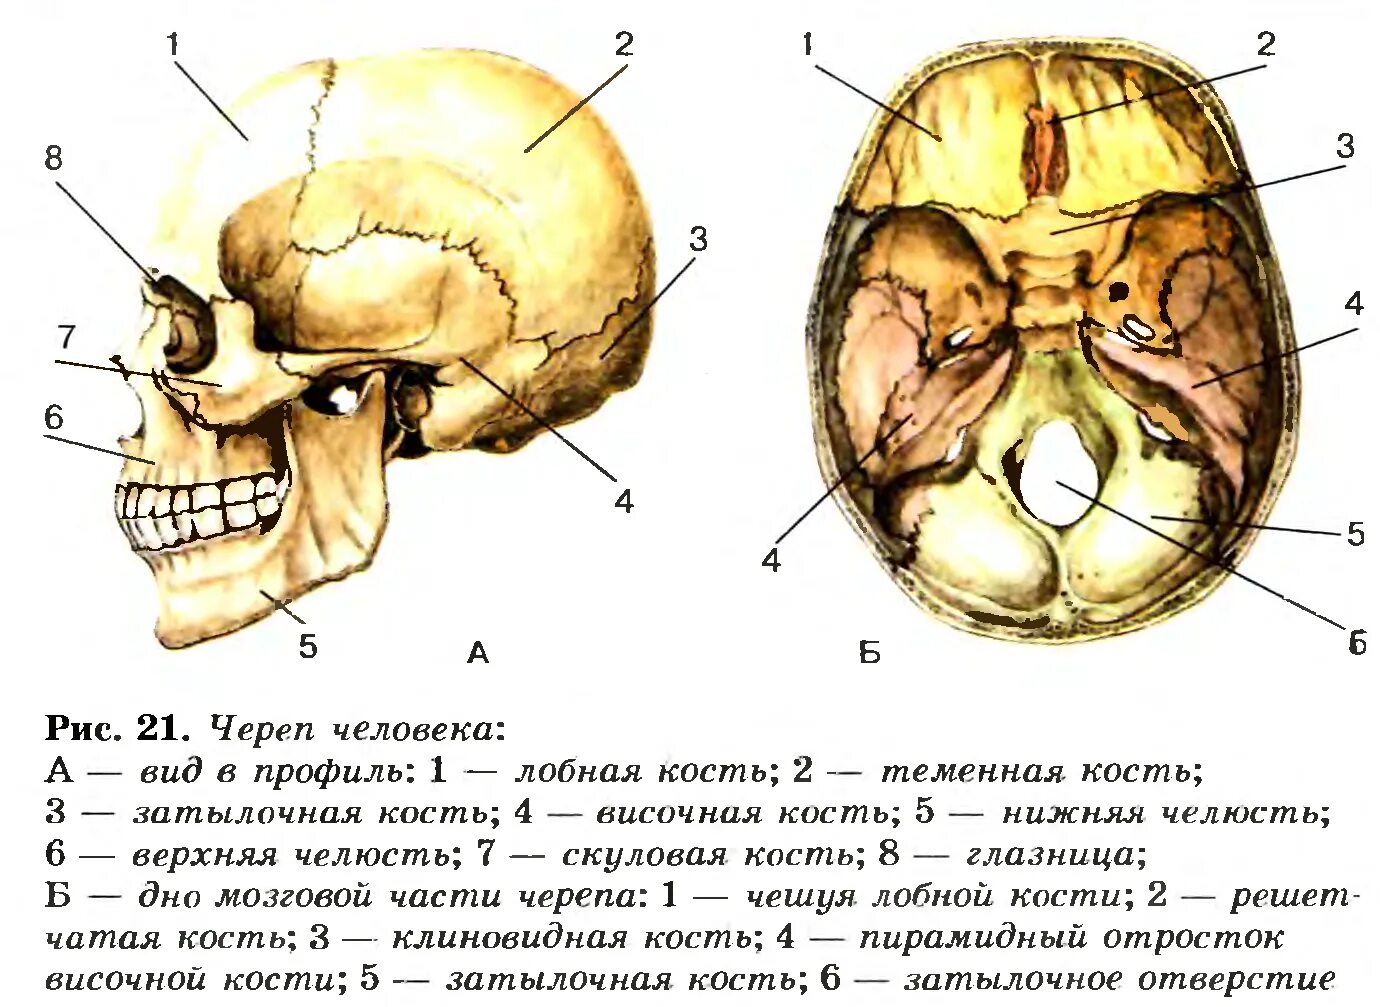 Части черепа человека названия. Кости скелета черепа человека. Строение головного черепа человека. Череп человека с названием костей. Назови кости черепа